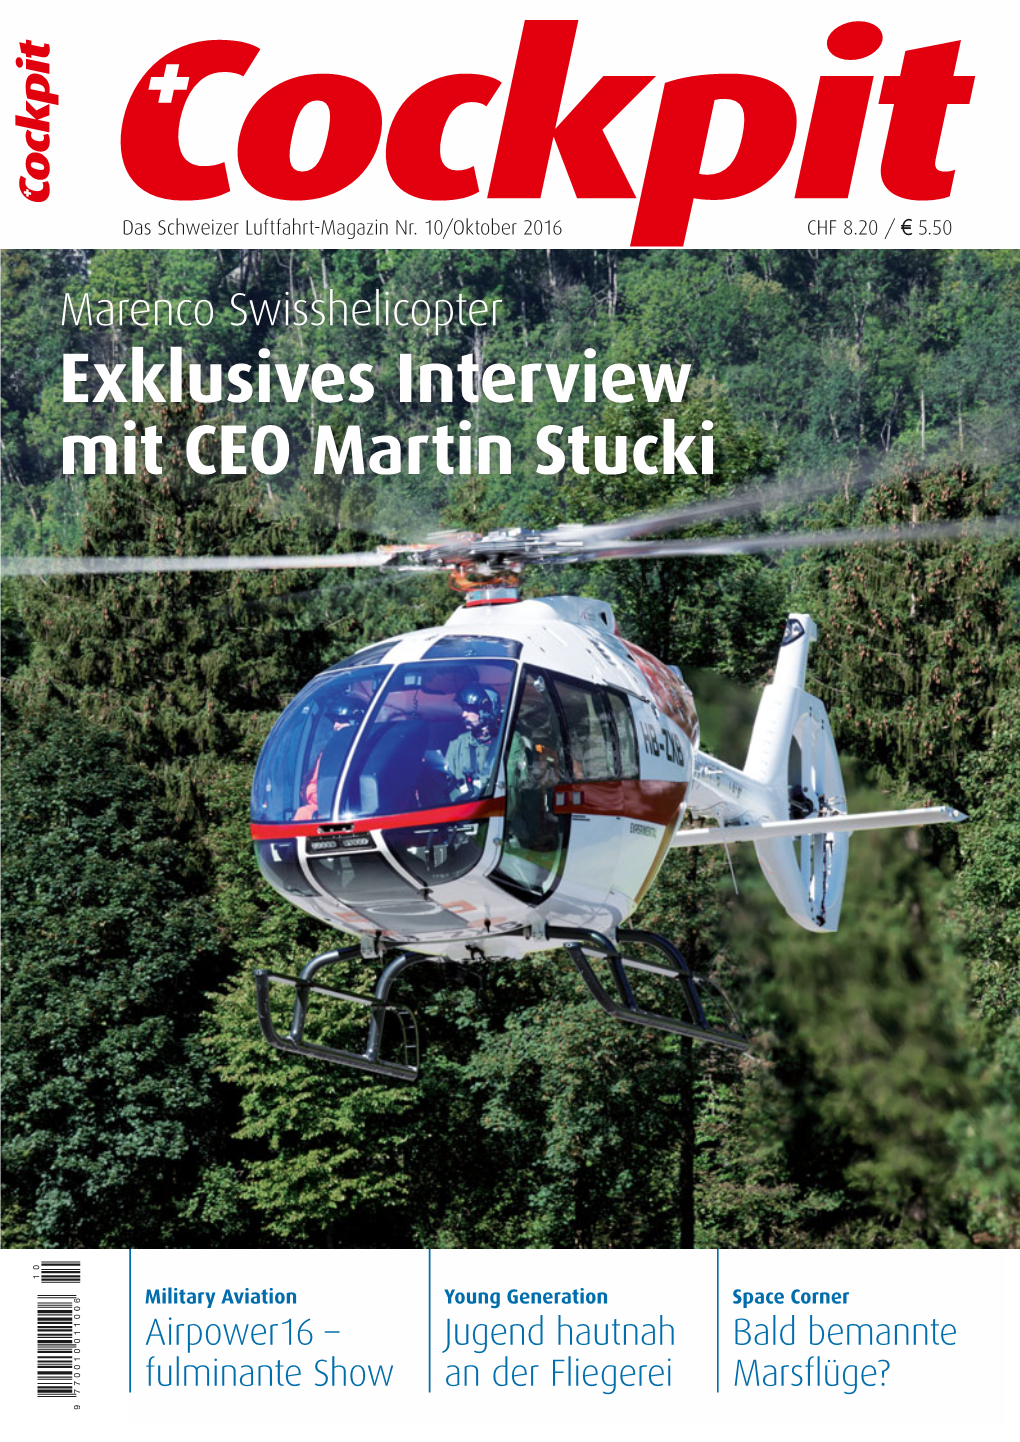 Marenco Swisshelicopter Mit CEO Martin Stucki Exklusives Interview